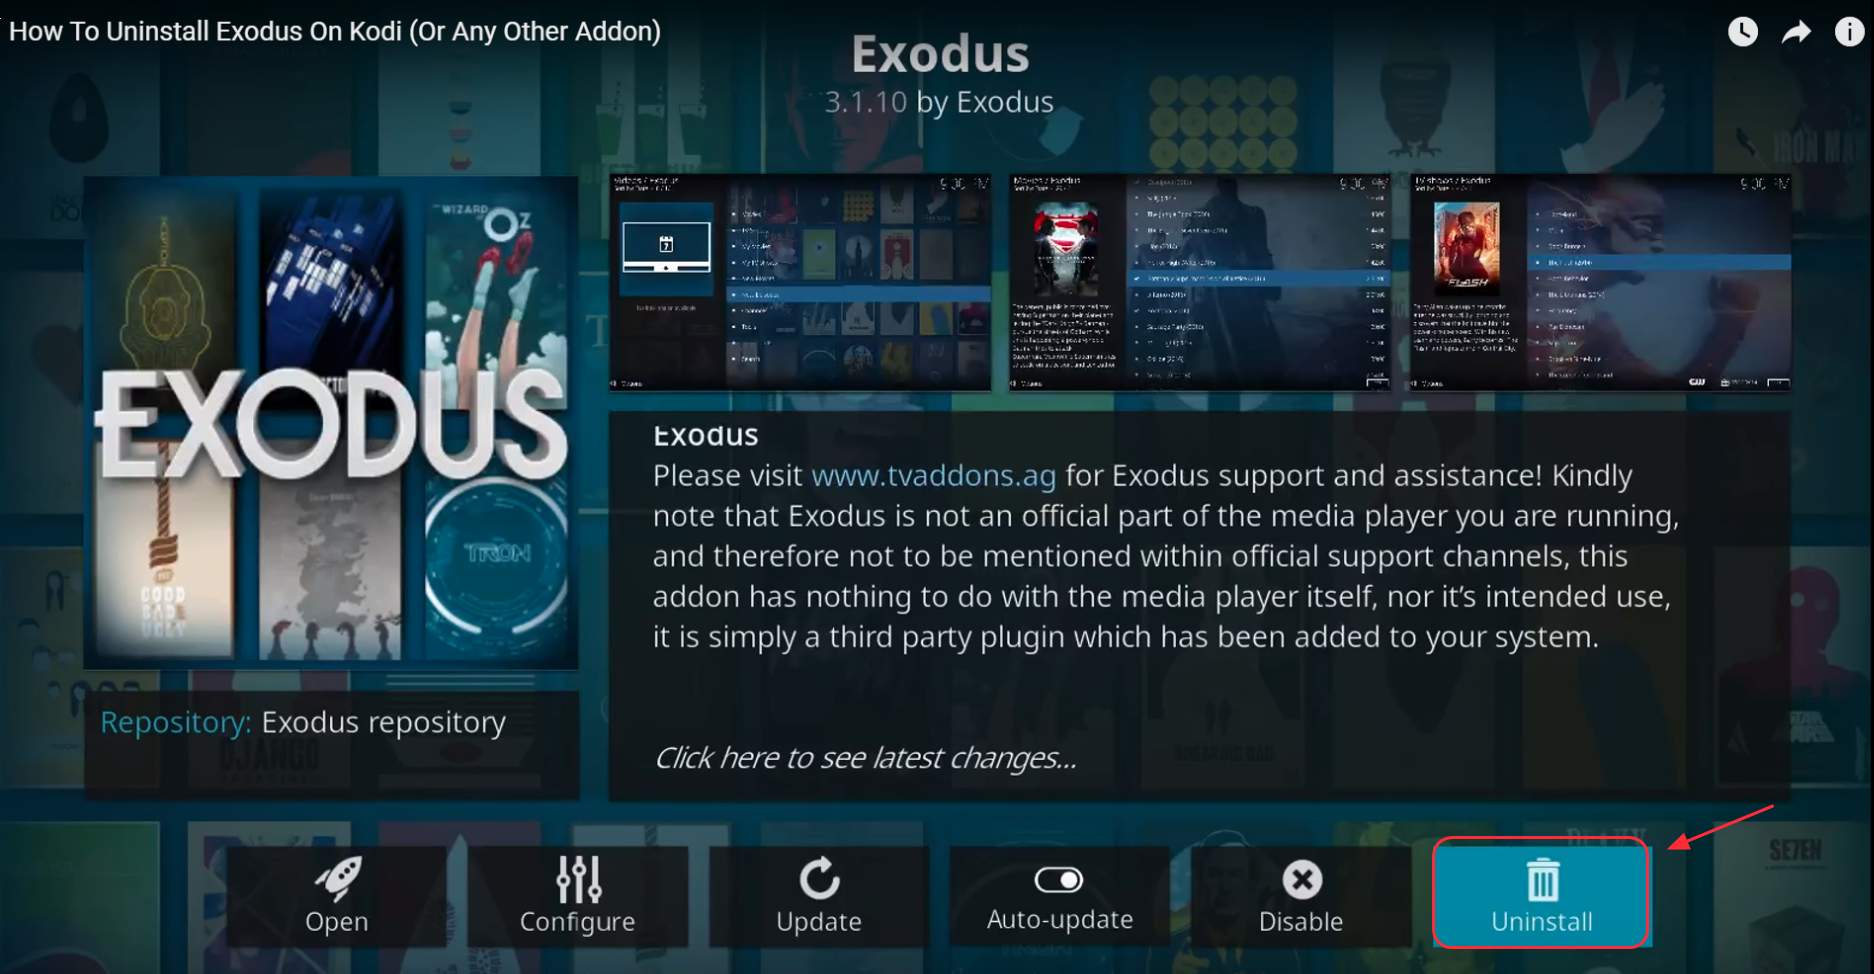 kodi exodus download status